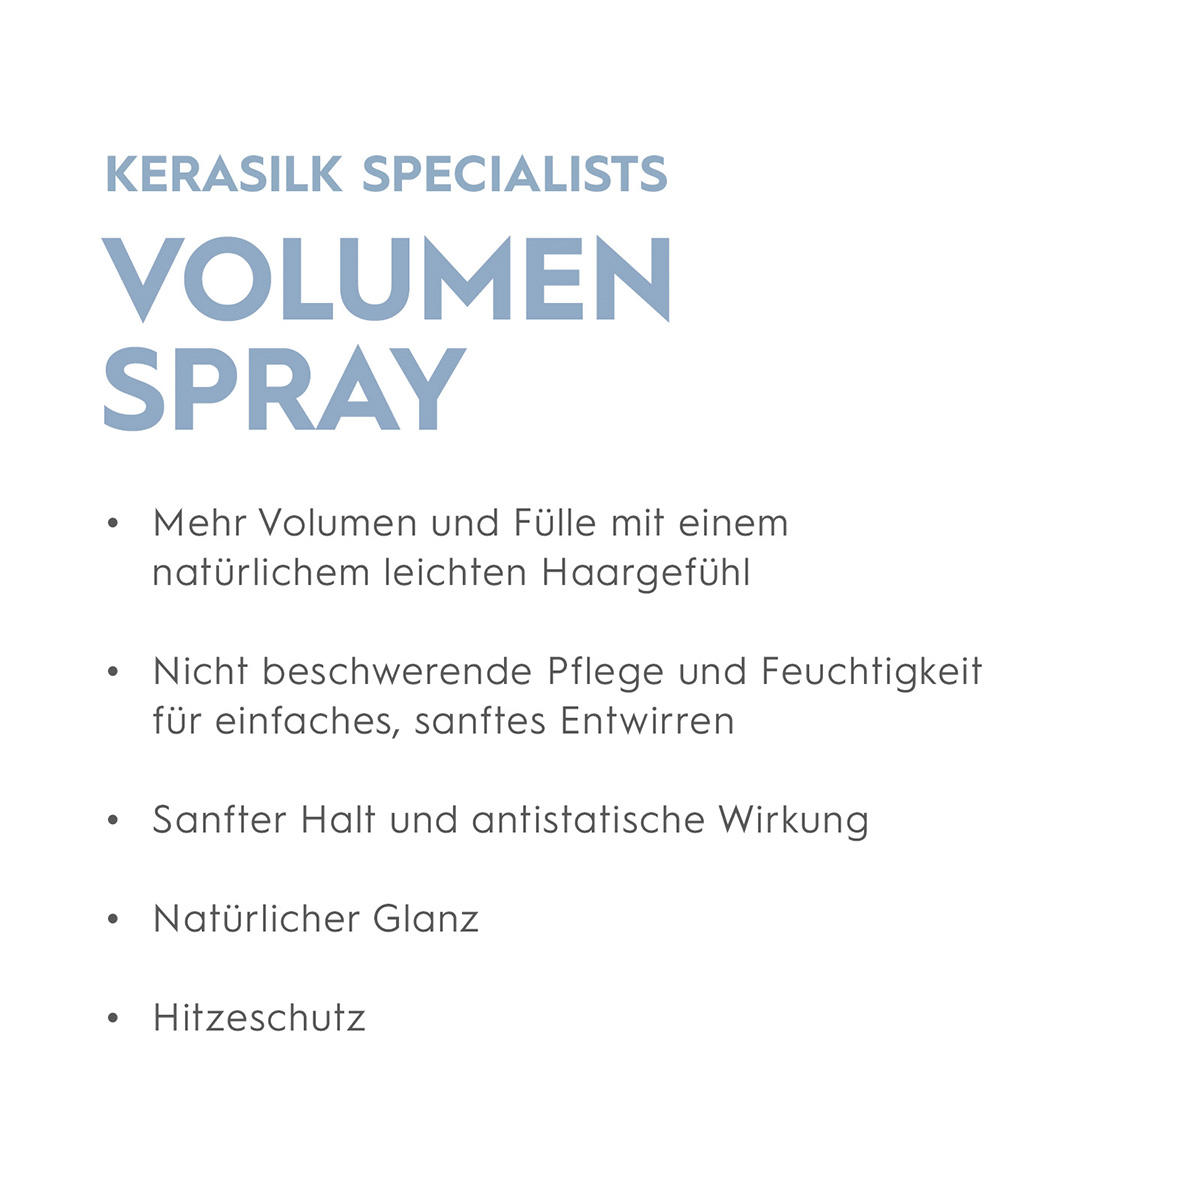 KERASILK spray volume 125 ml - 3